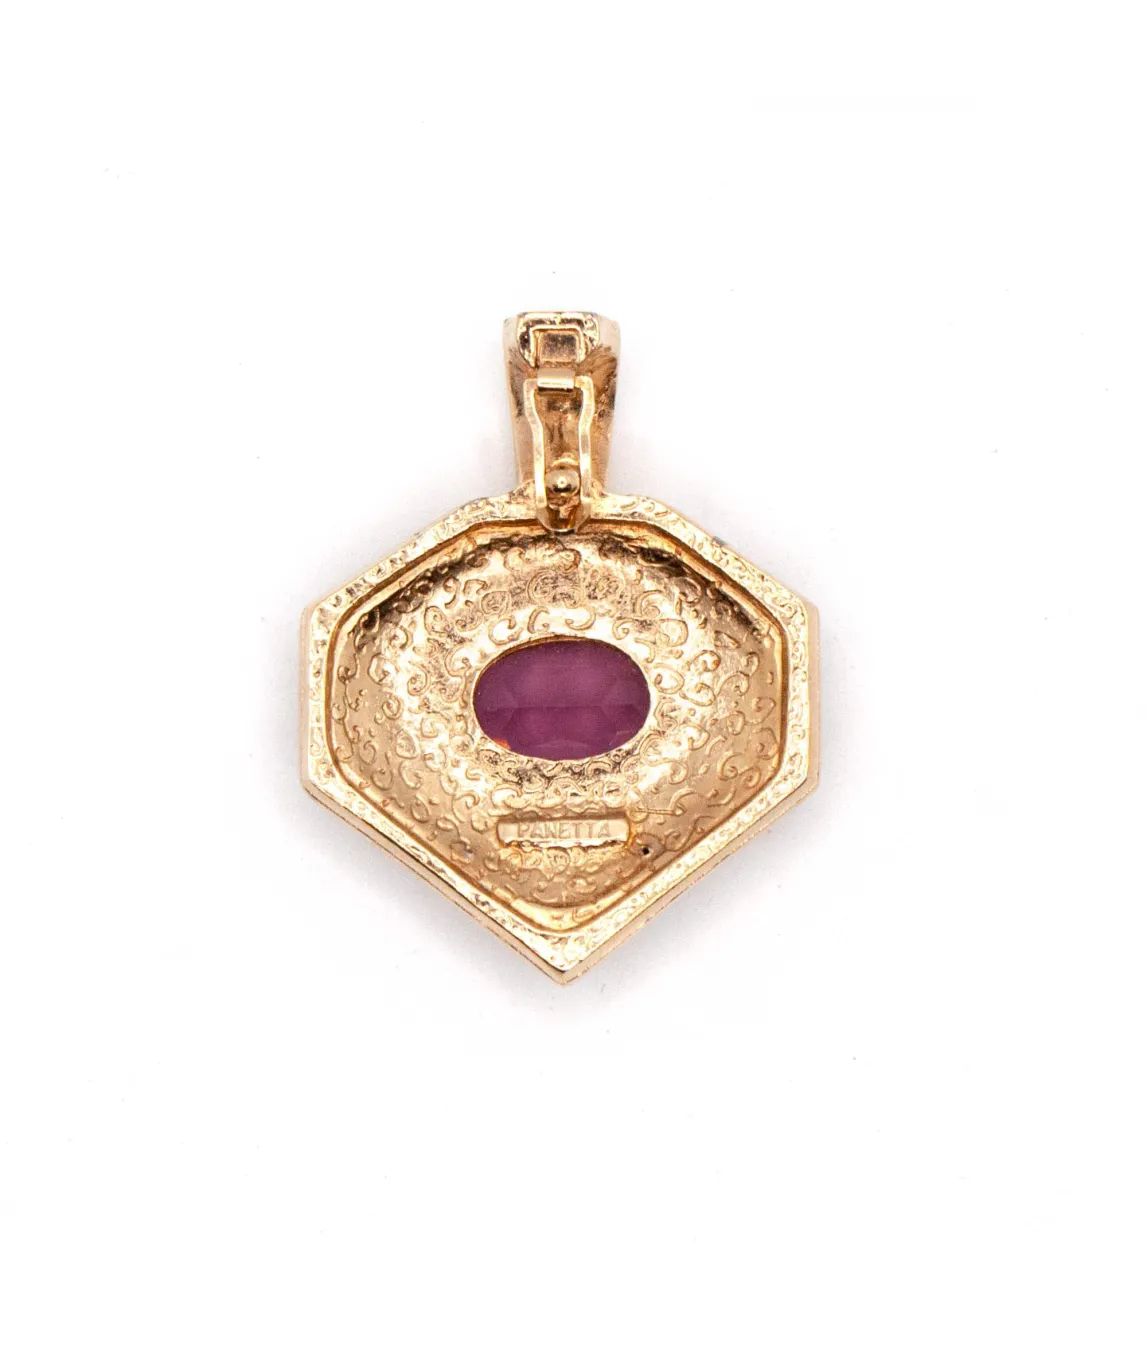 Panetta rhinestone and amethyst glass pendant with hinged bale